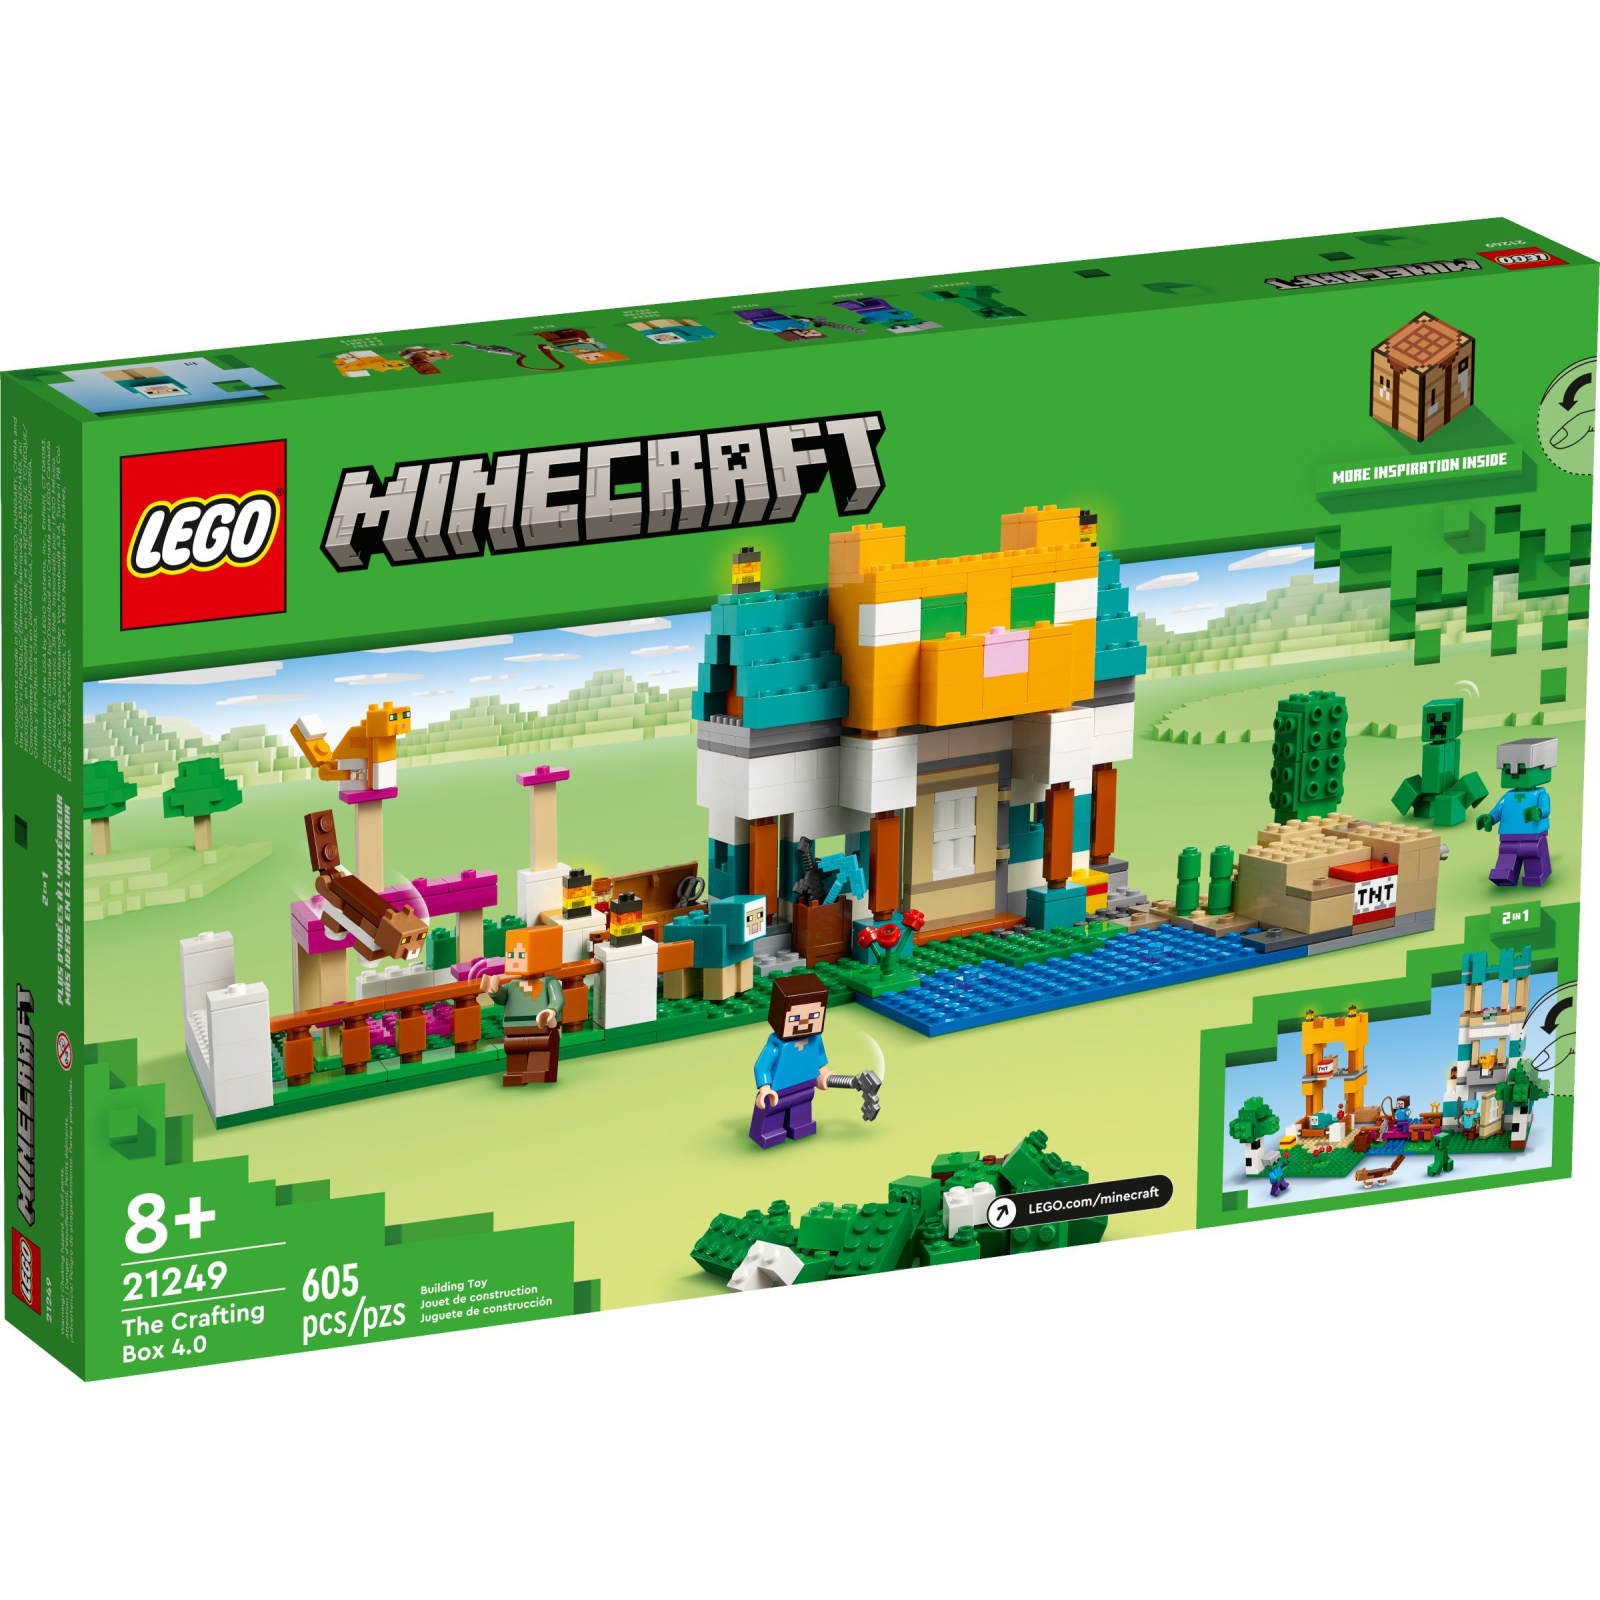 Конструктор LEGO Minecraft Скриня для творчості 4.0, 605 деталей (21249) зображення 7